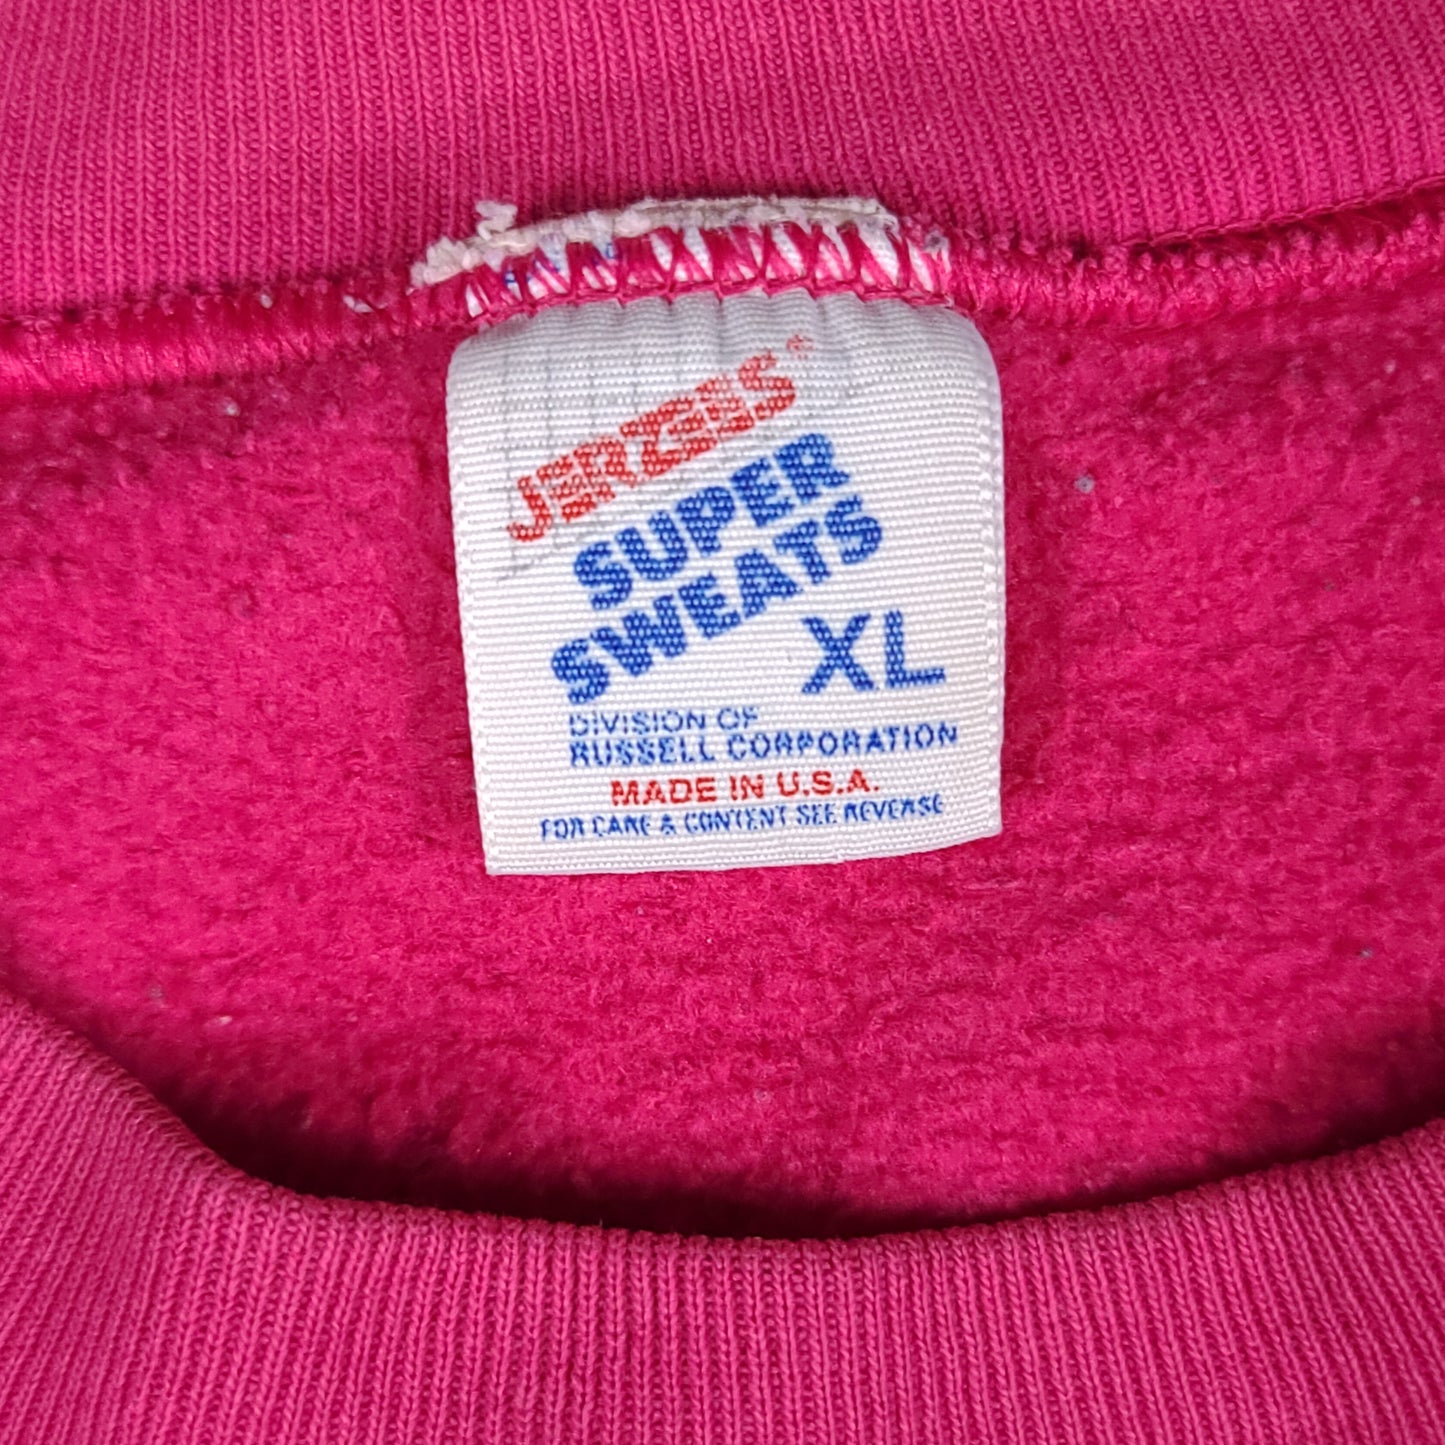 Vintage Mickey Mouse Pink Painted Sweatshirt